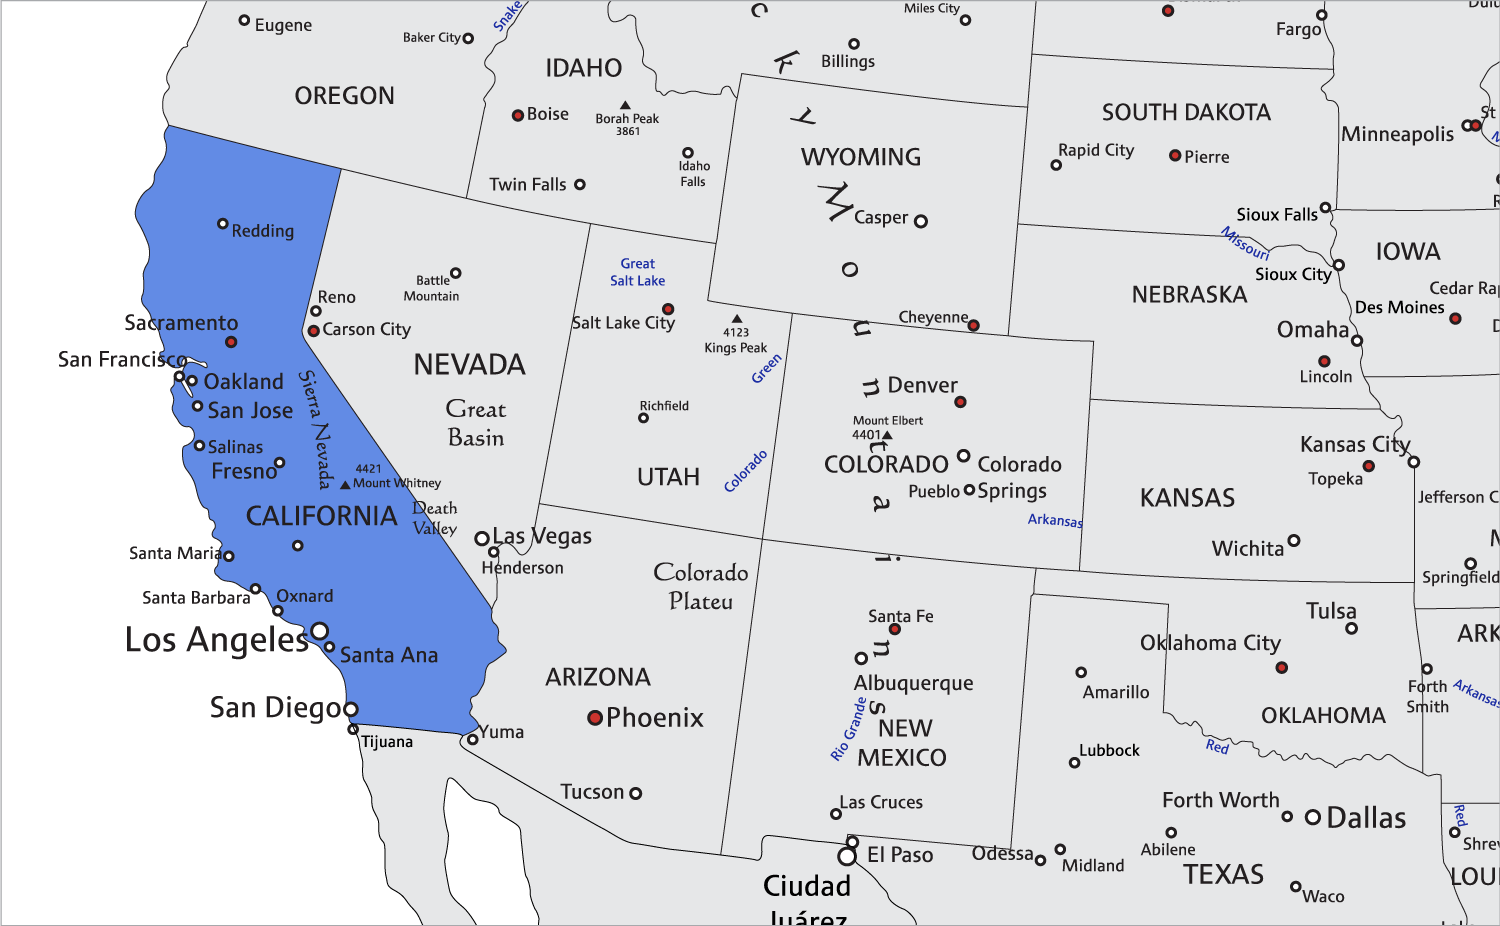 Copy of Los Angeles - SQSP Test